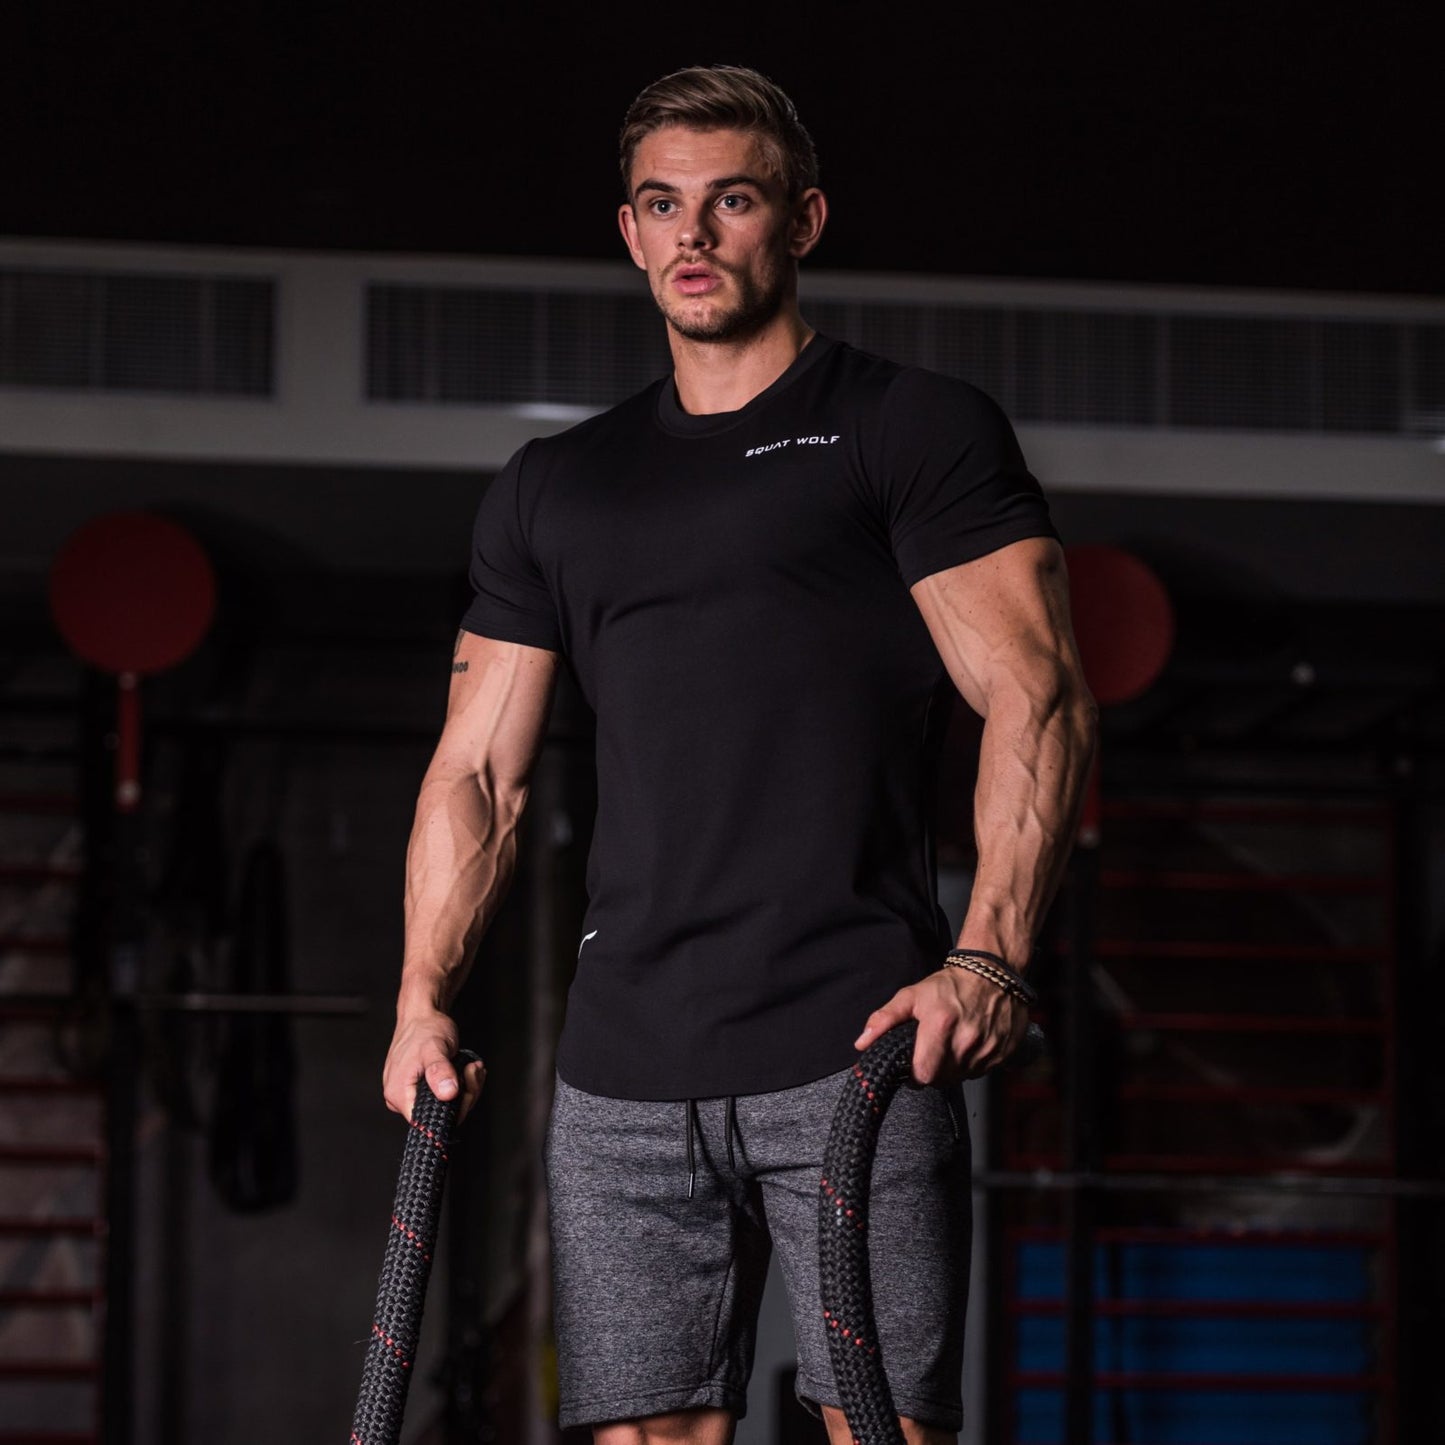 squatwolf-gym-wear-razor-back-tee-black-workout-shirts-for-men